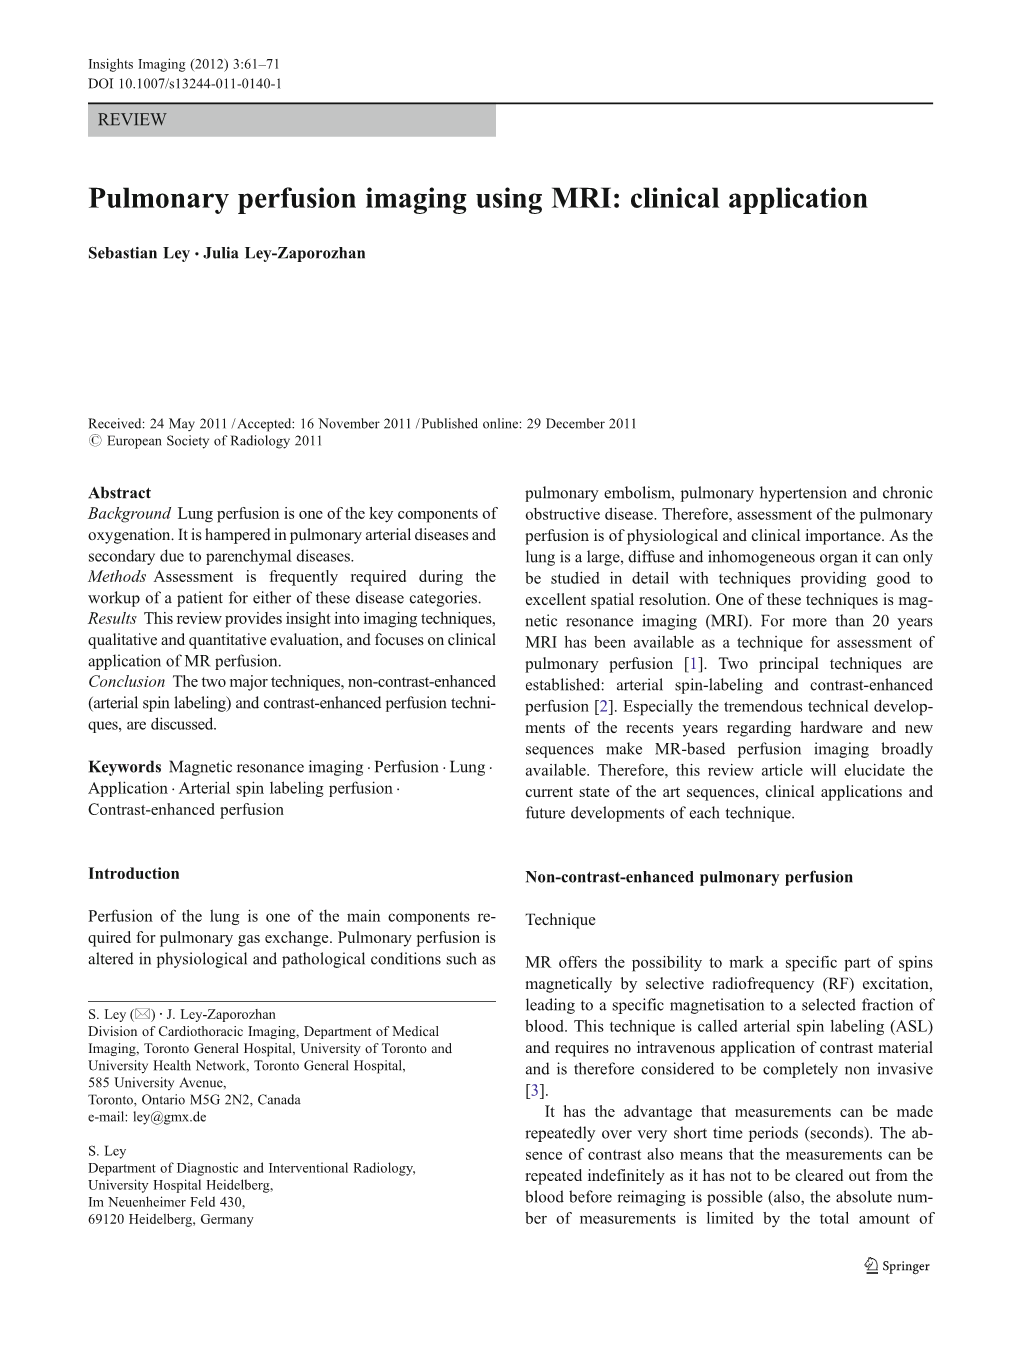 Pulmonary Perfusion Imaging Using MRI: Clinical Application